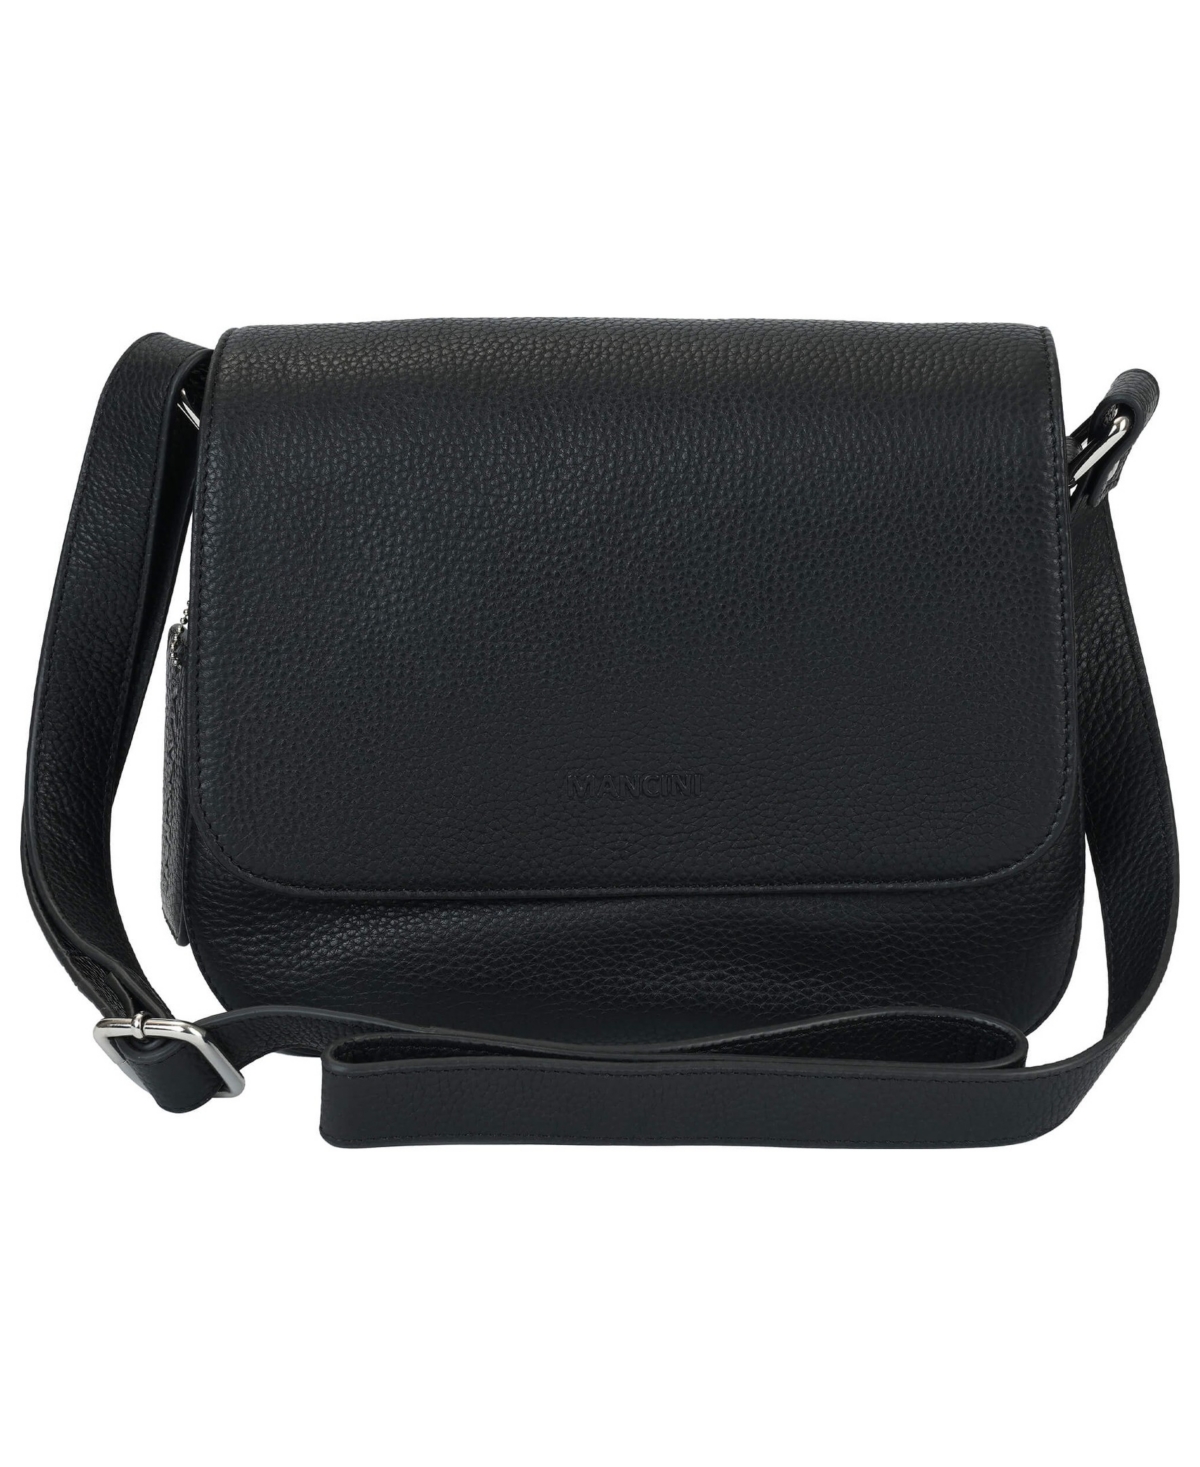 Pebble Alison Leather Crossbody Handbag - Brown